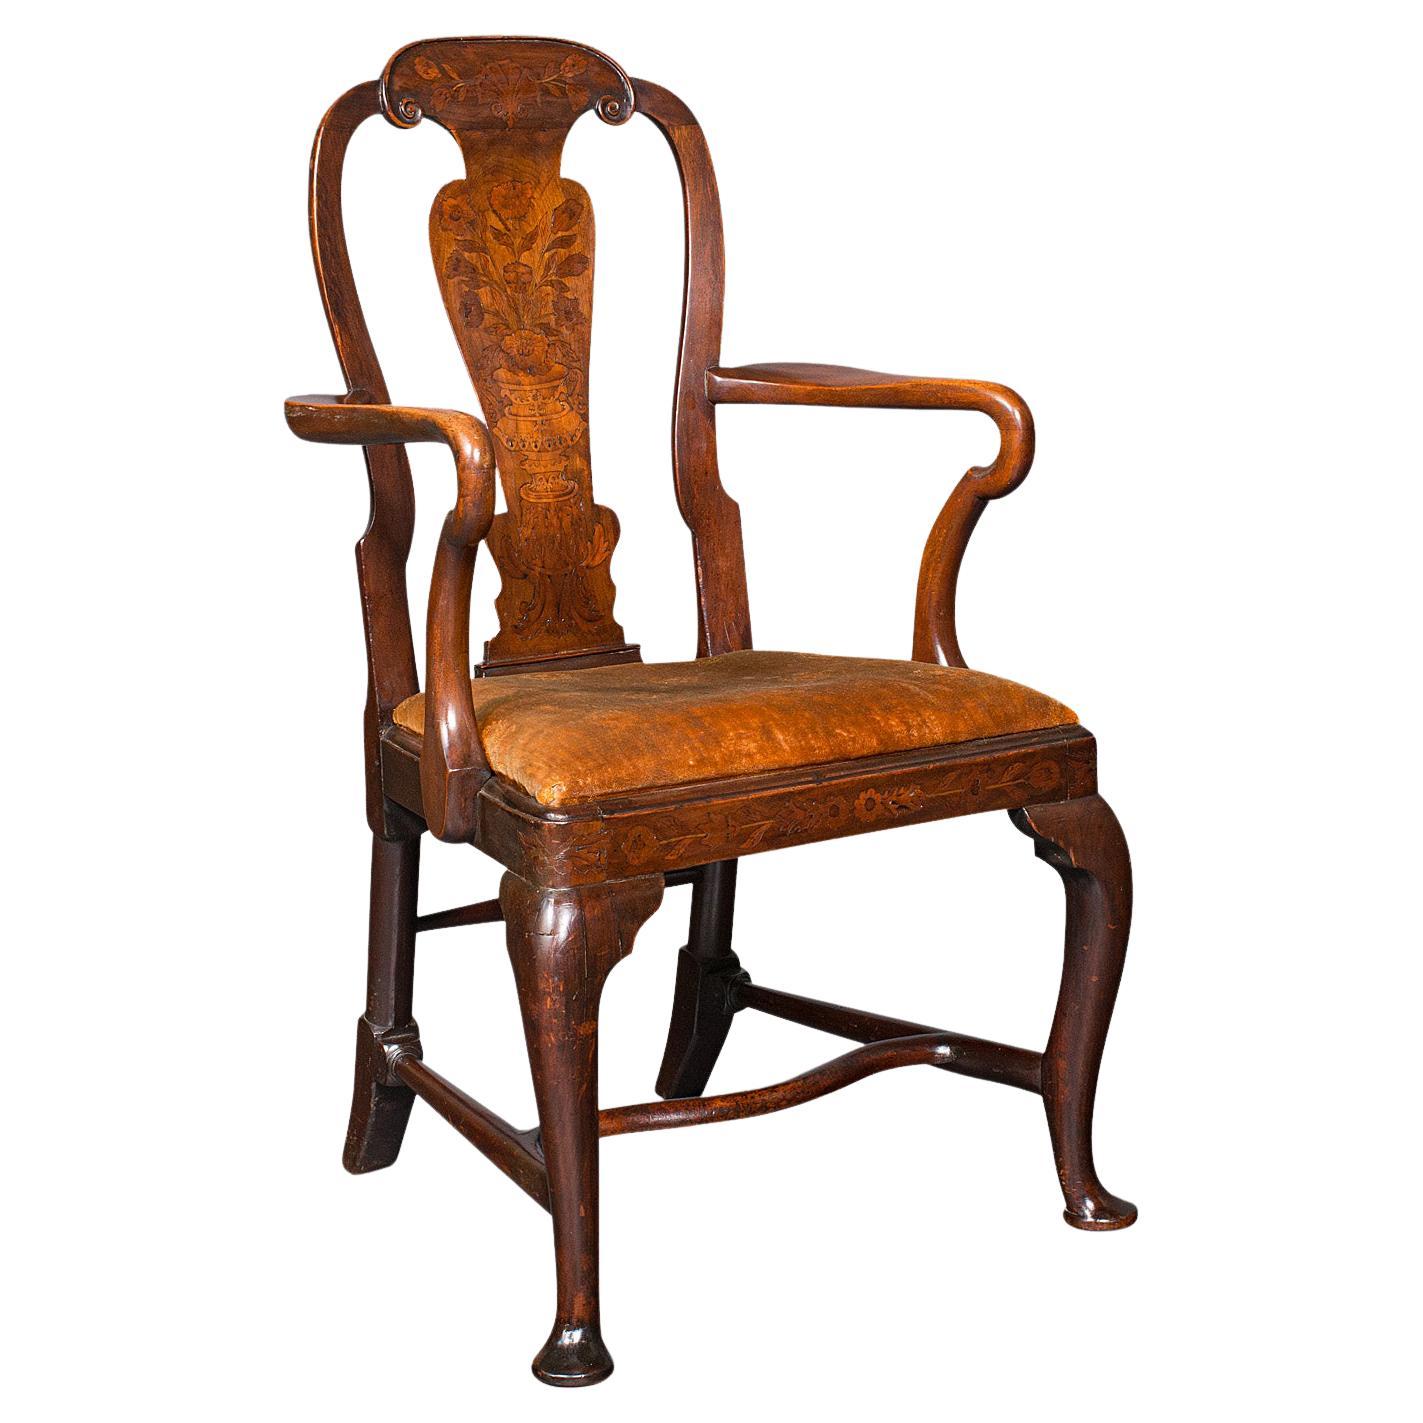 Antique Marquetry Elbow Chair, Dutch, Beech, Fruitwood, Carver, Georgian, C.1800